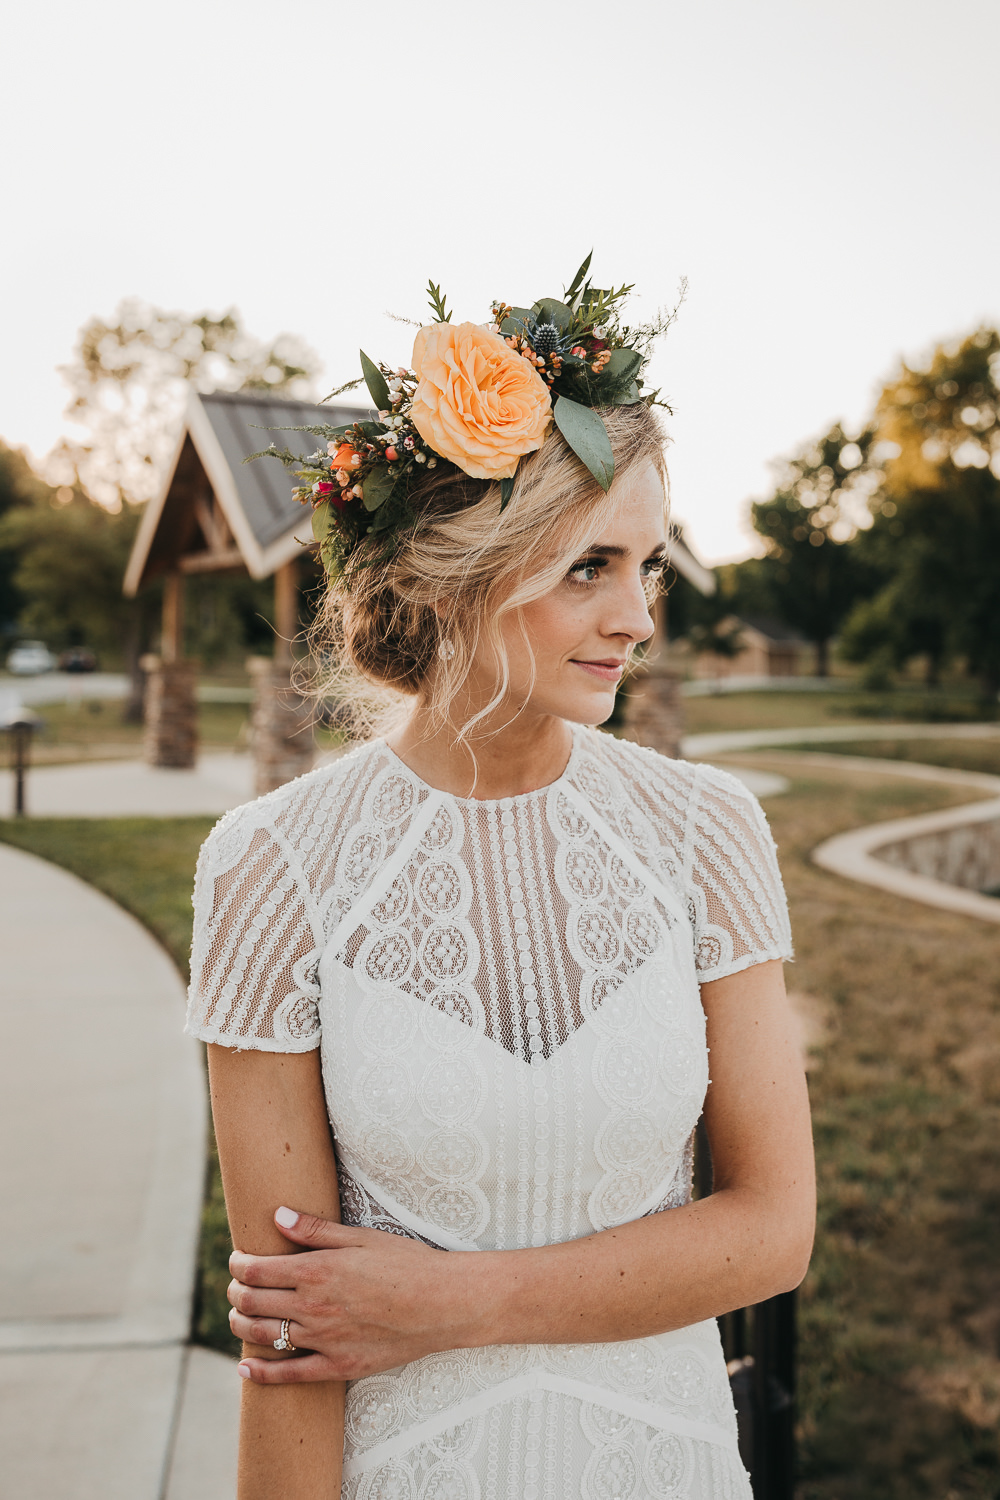 Wedding hair styles for a modern, wild bride | DBMH Blog